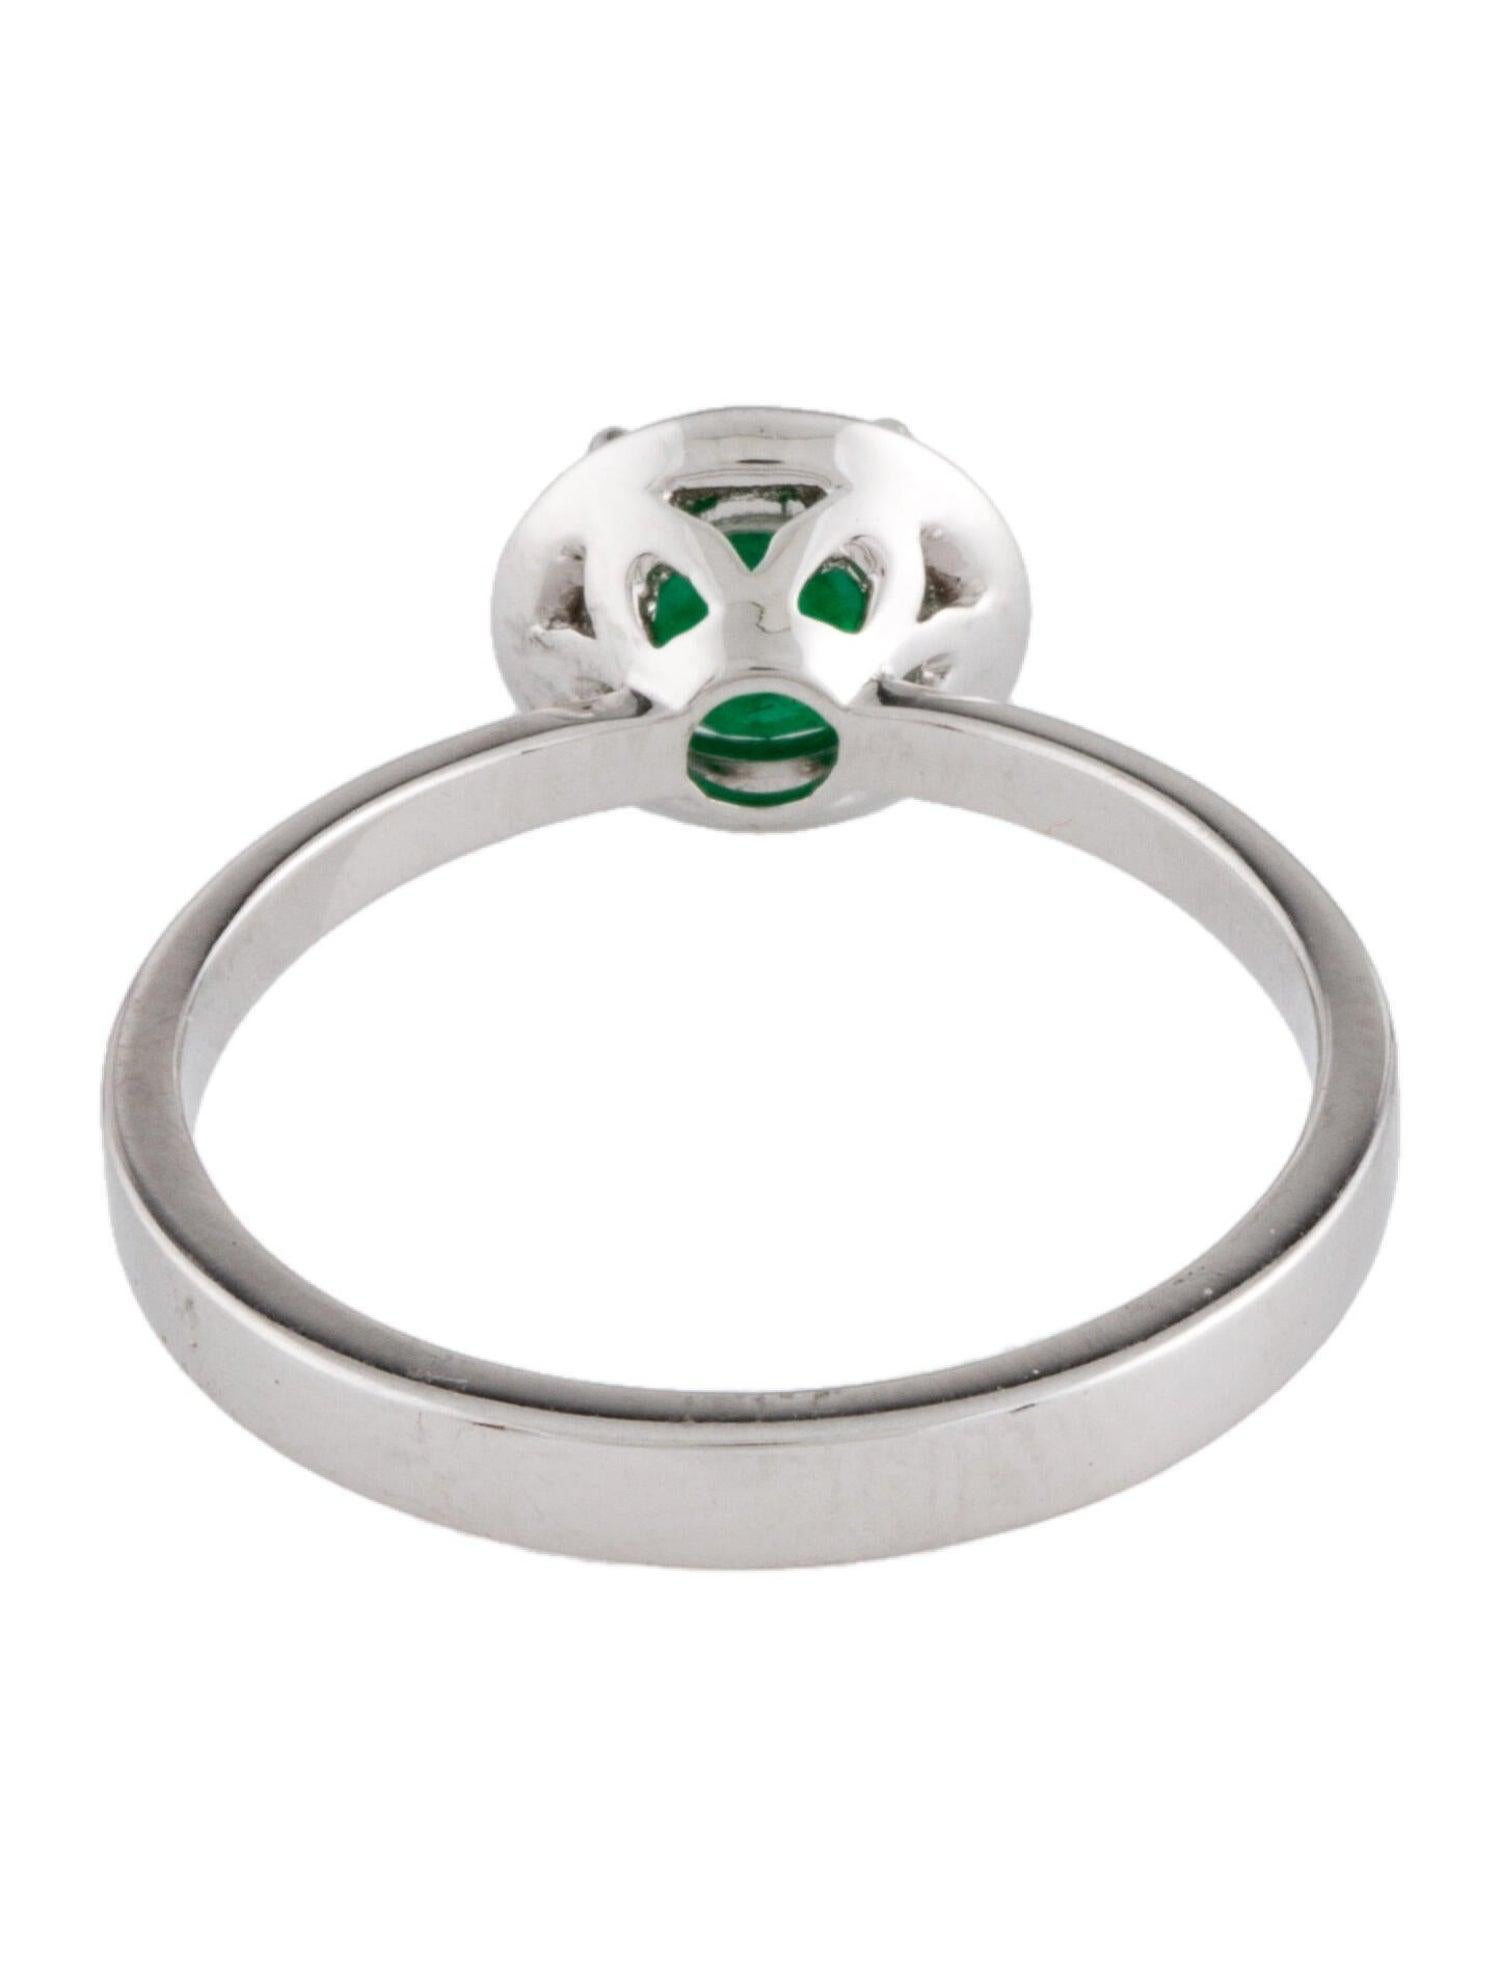 Brilliant Cut 18K Emerald & Diamond Cocktail Ring - Size 6.75 - Elegant Statement Jewelry For Sale